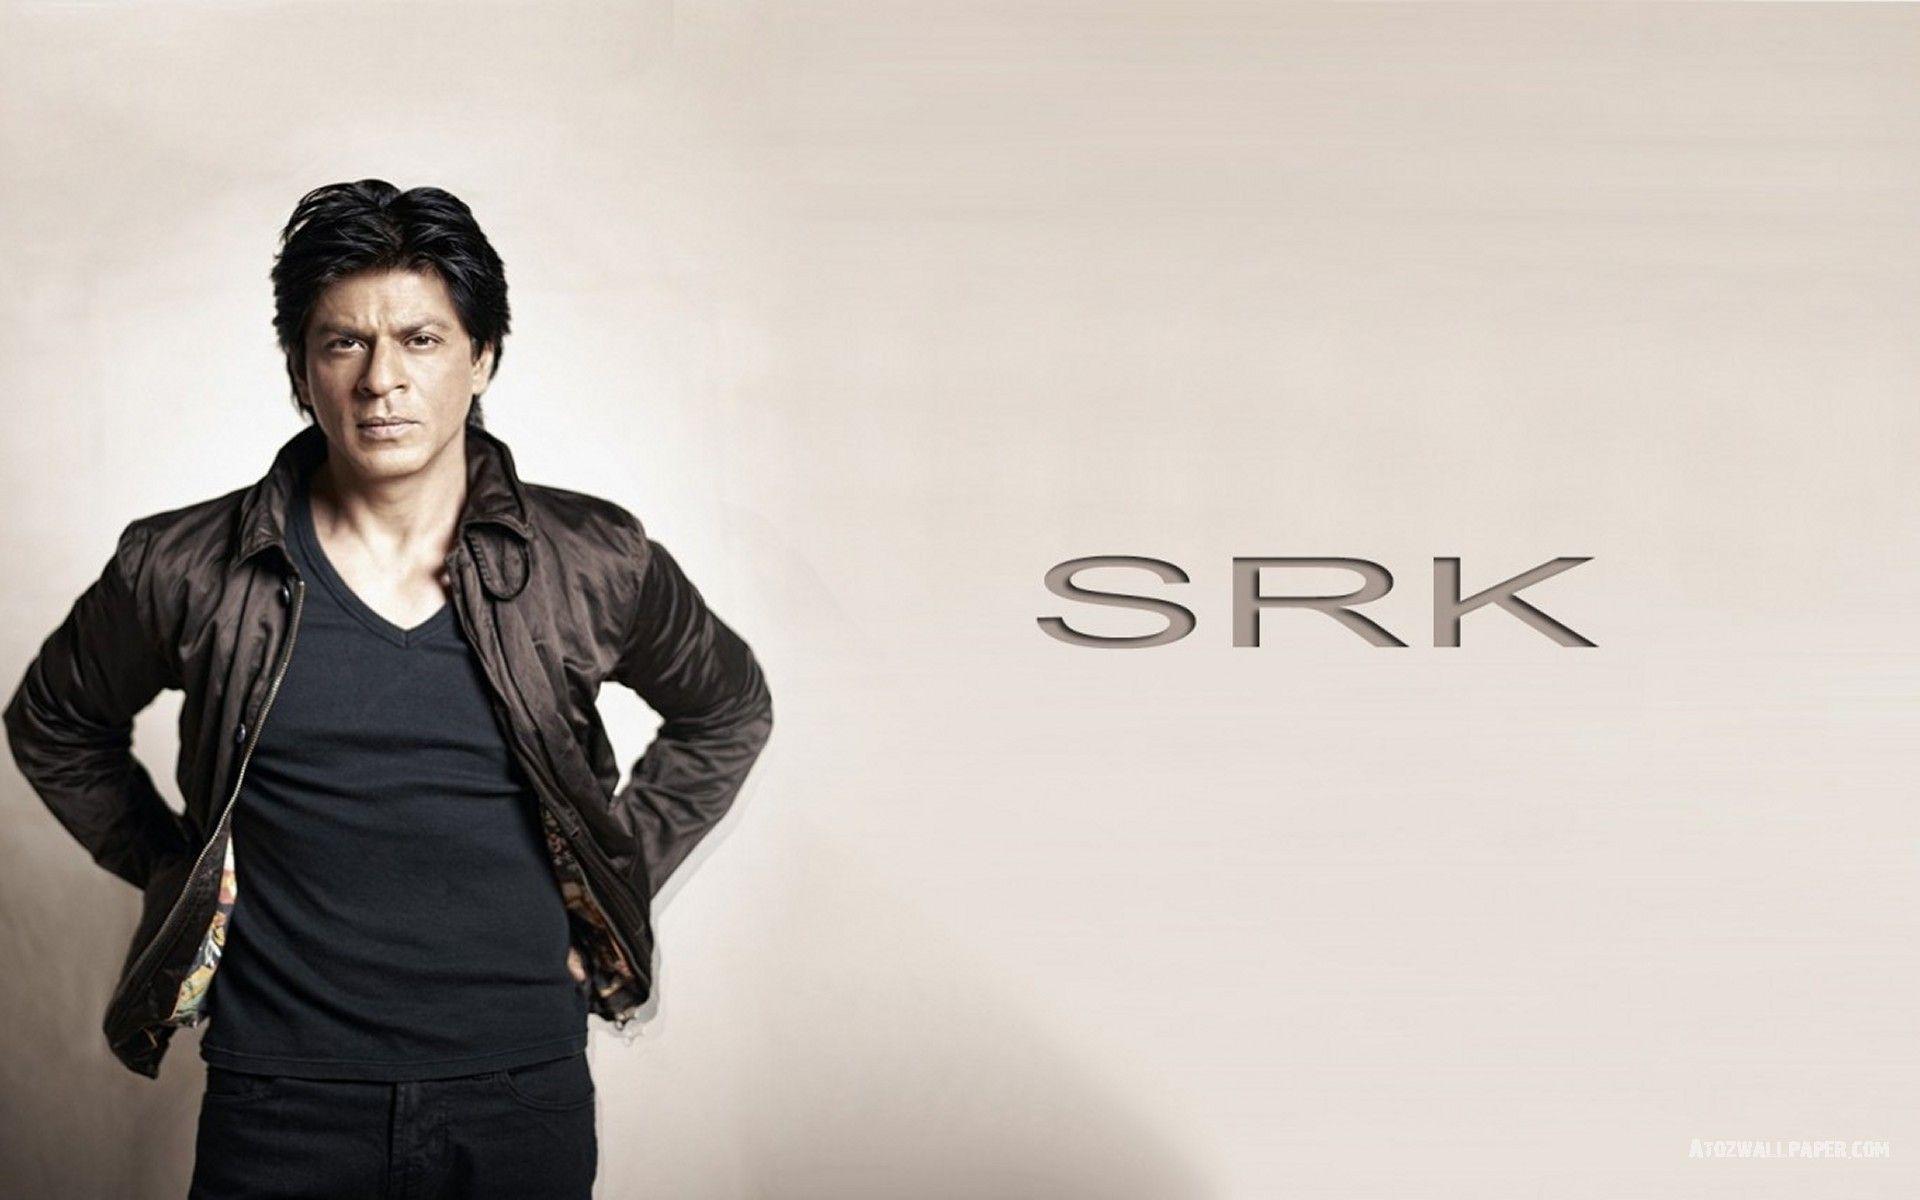 Shahrukh Khan Wallpapers HD Backgrounds, Image, Pics, Photos Free